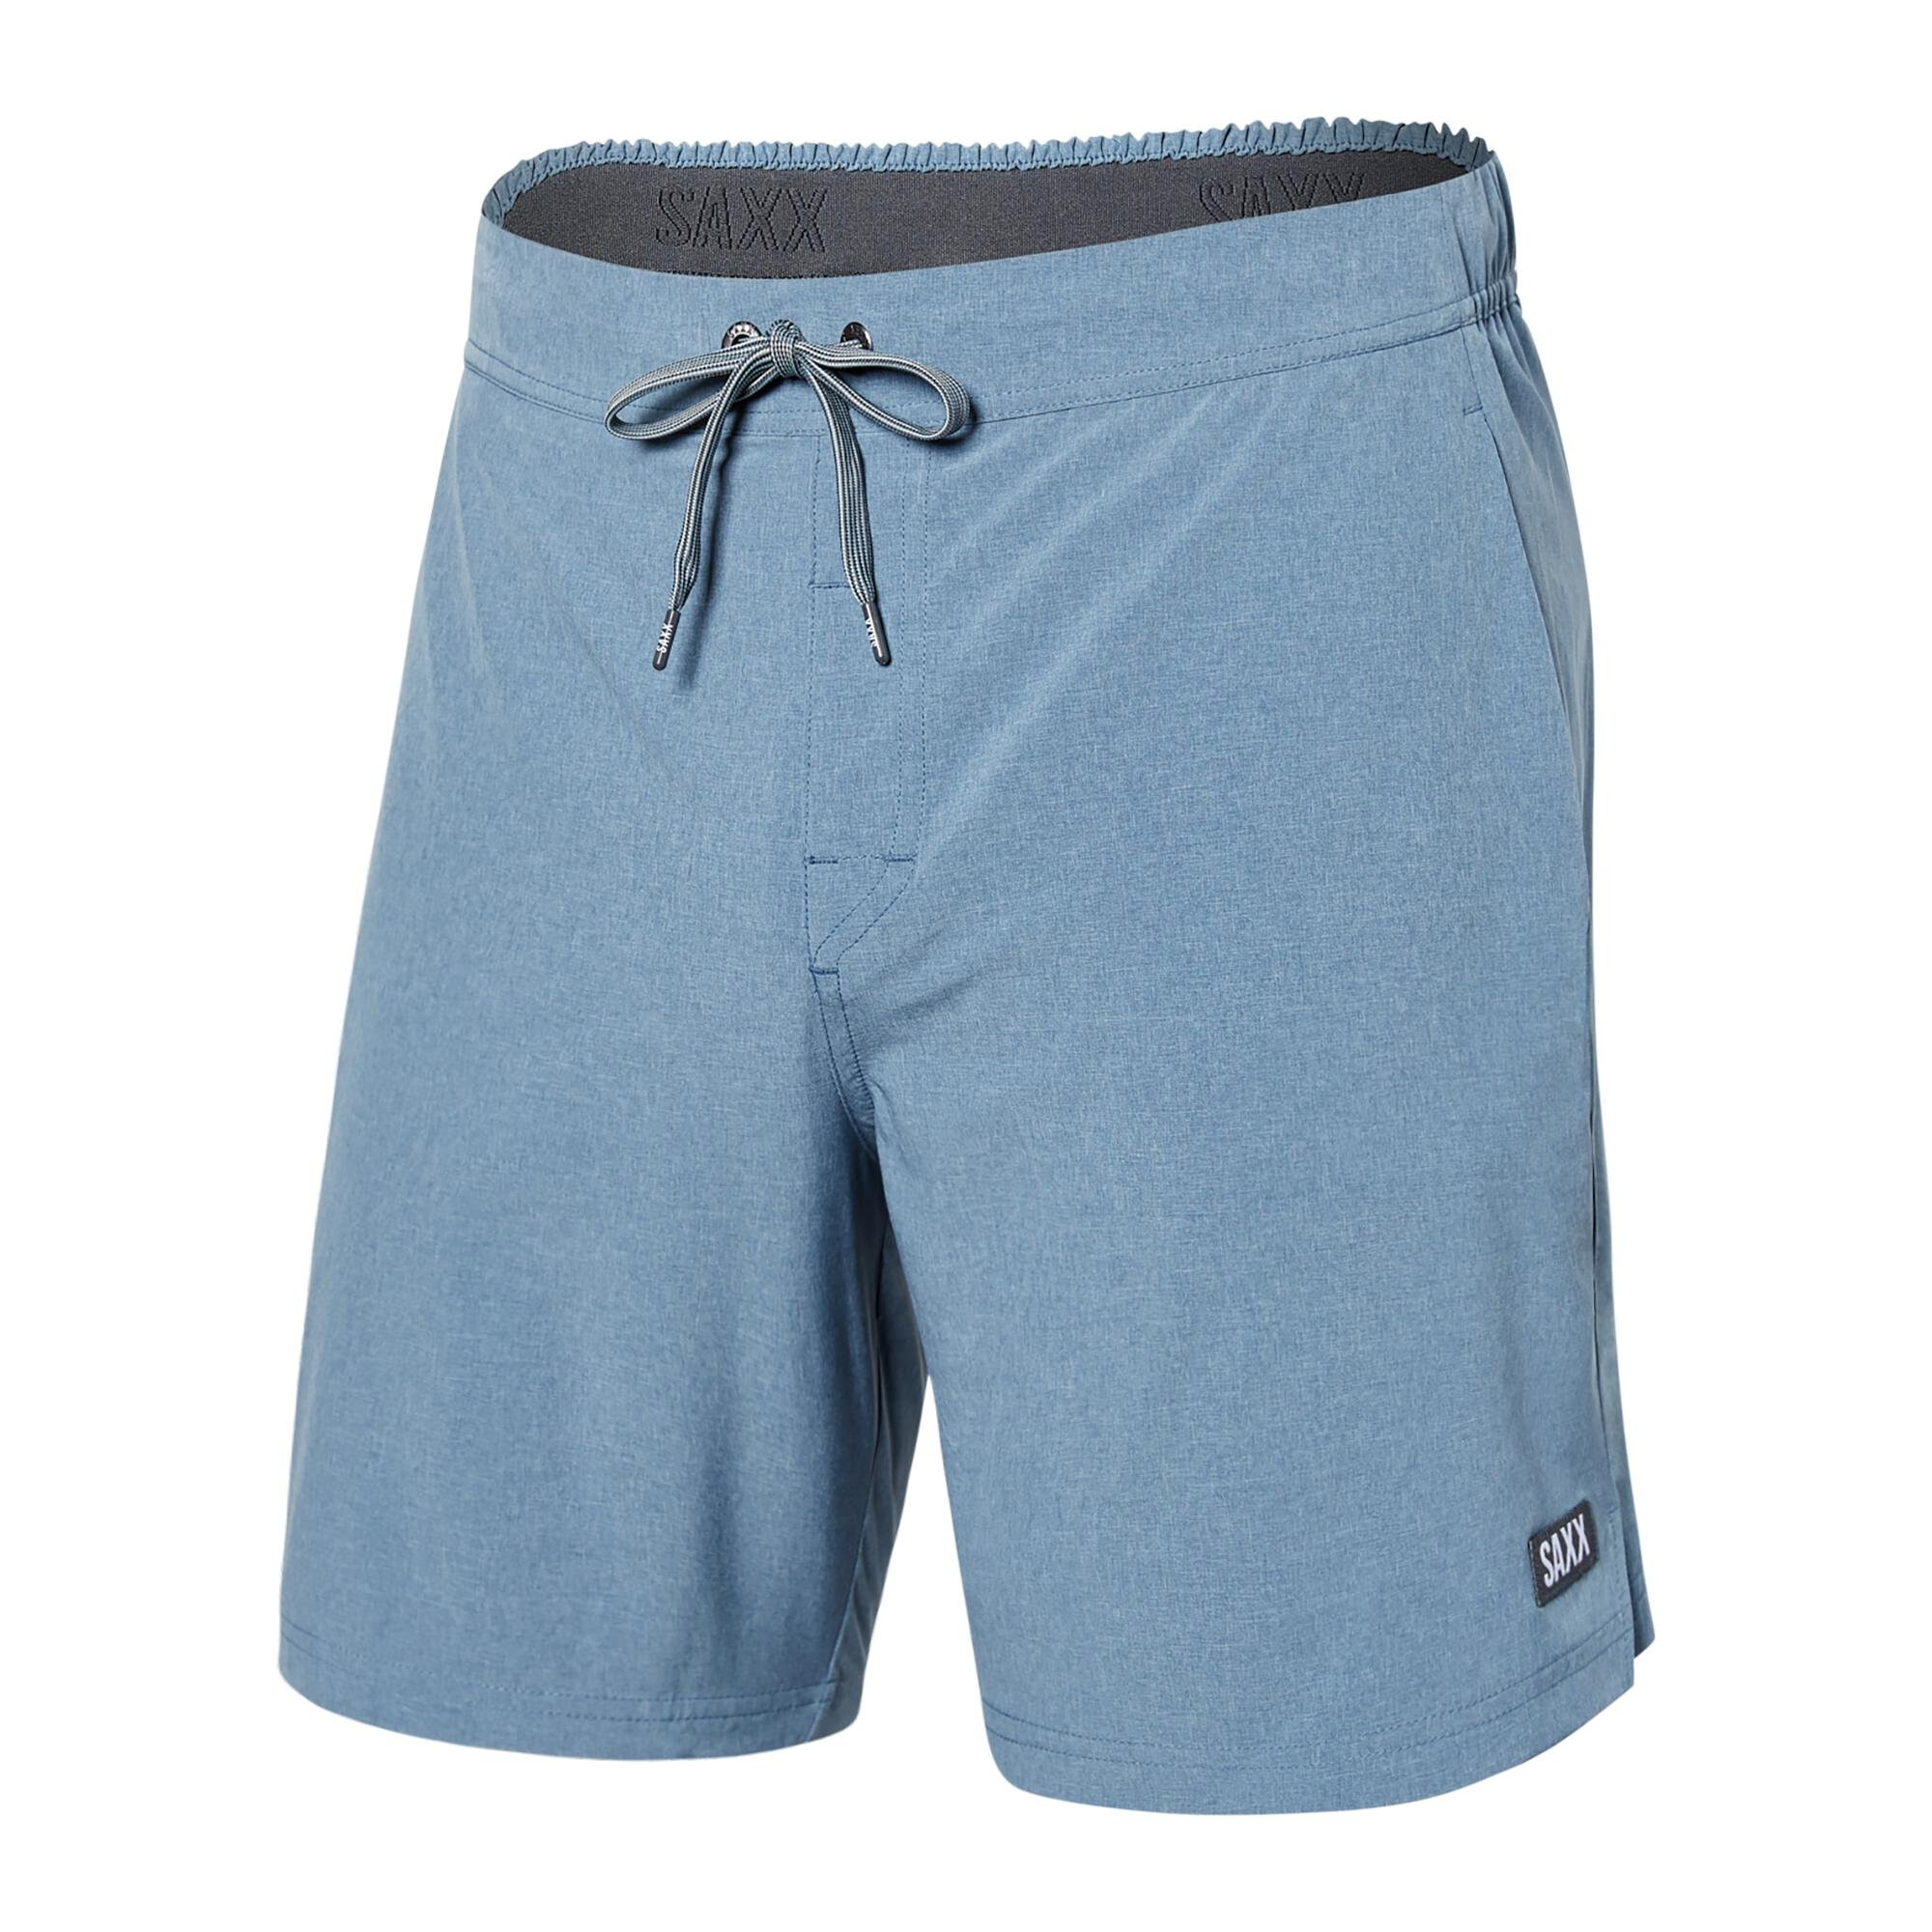 Imbracaminte Barbati SAXX UNDERWEAR Sport 2 Life 2-N-1 7quot Shorts with Sport Mesh Liner Stone Blue Heather